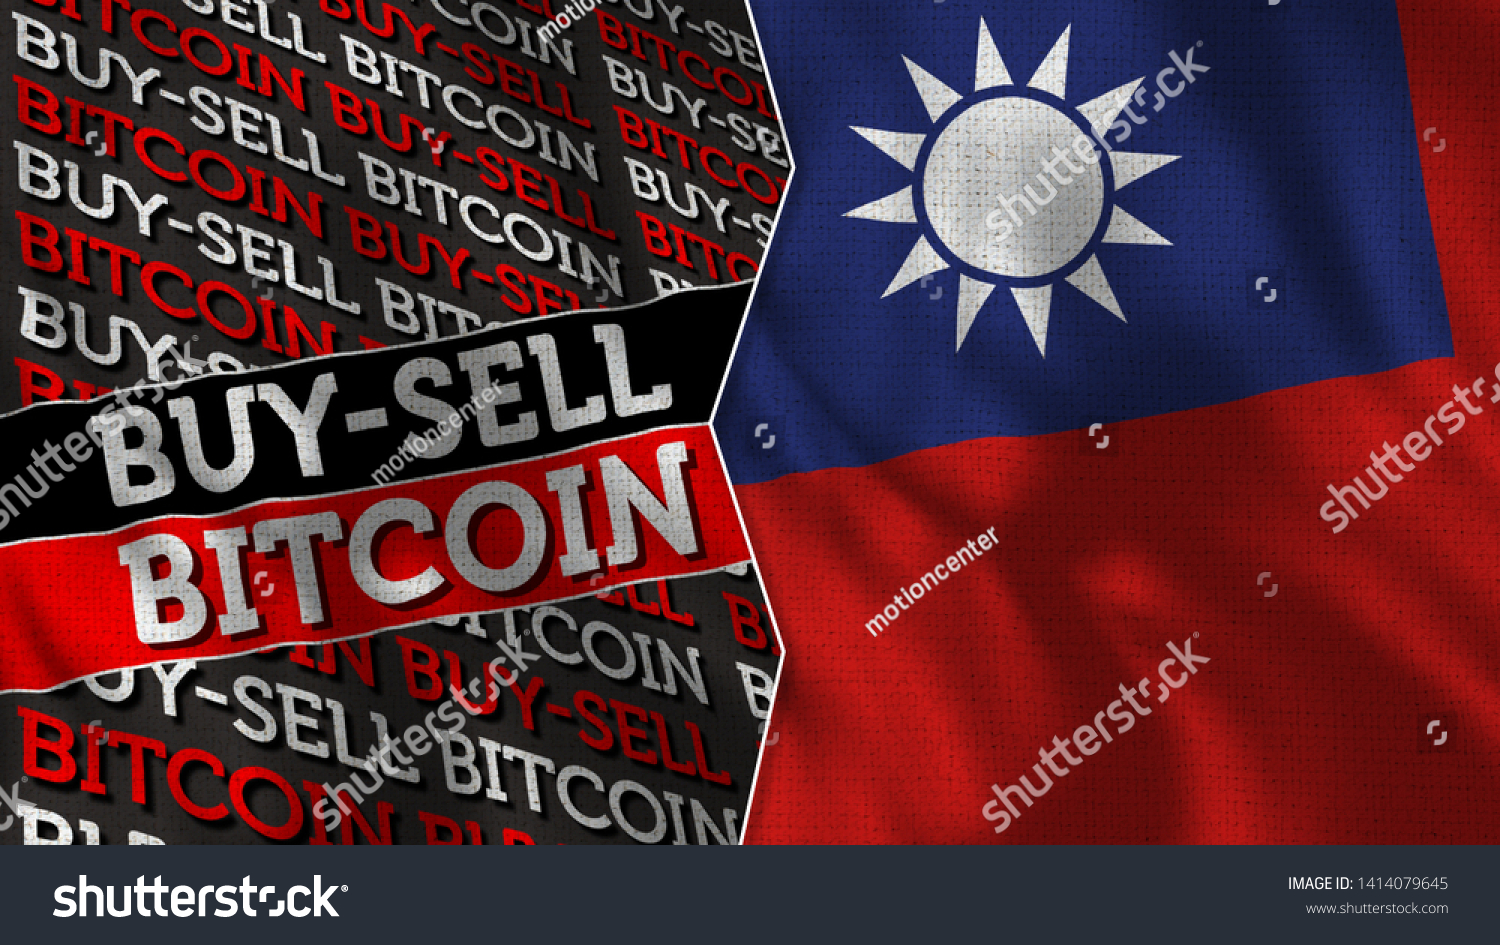 Taiwan Buy Sell Bitcoin Title Flag Stock Illustration 1414079645